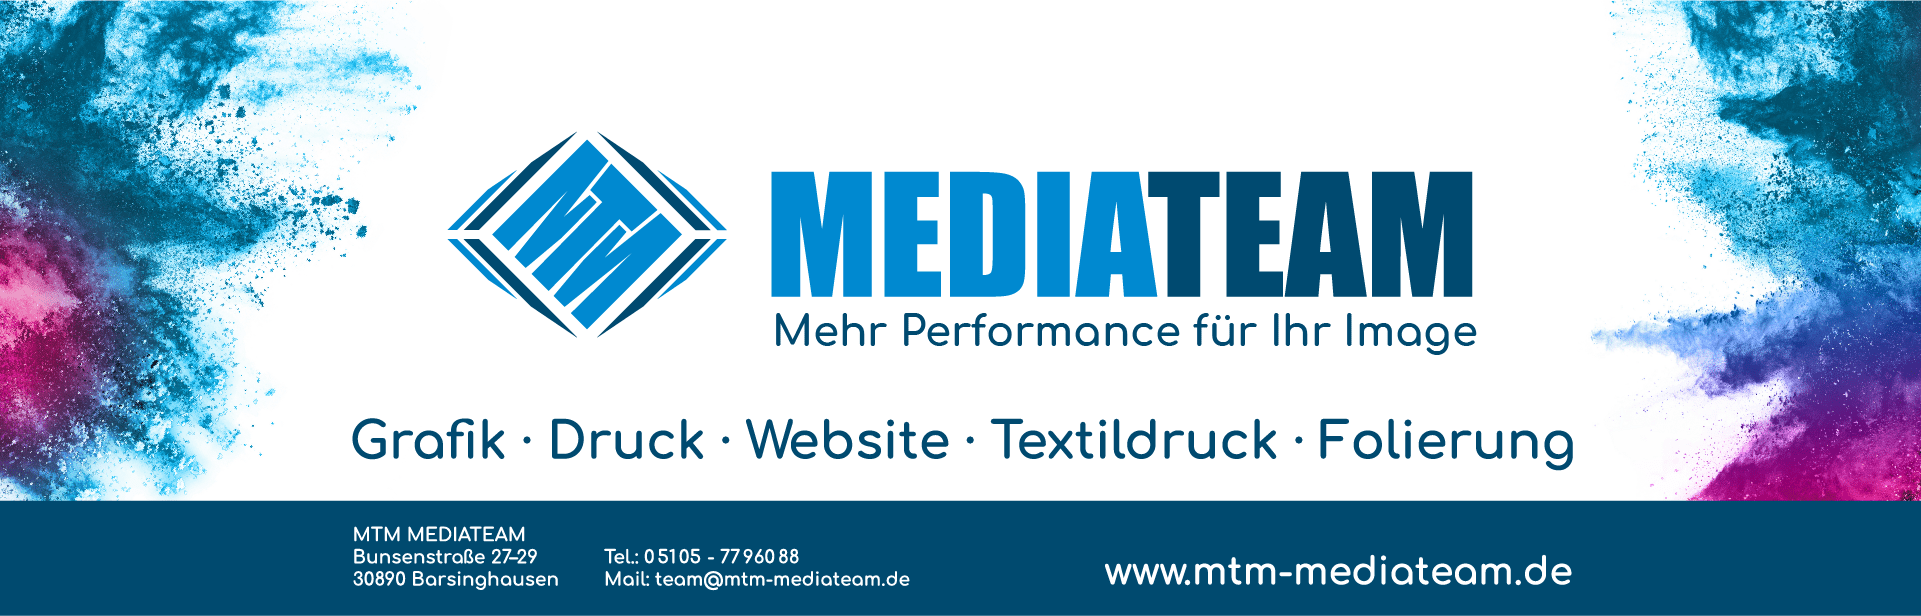 Sponsorenlogo MTM Mediateam Werbeagentur